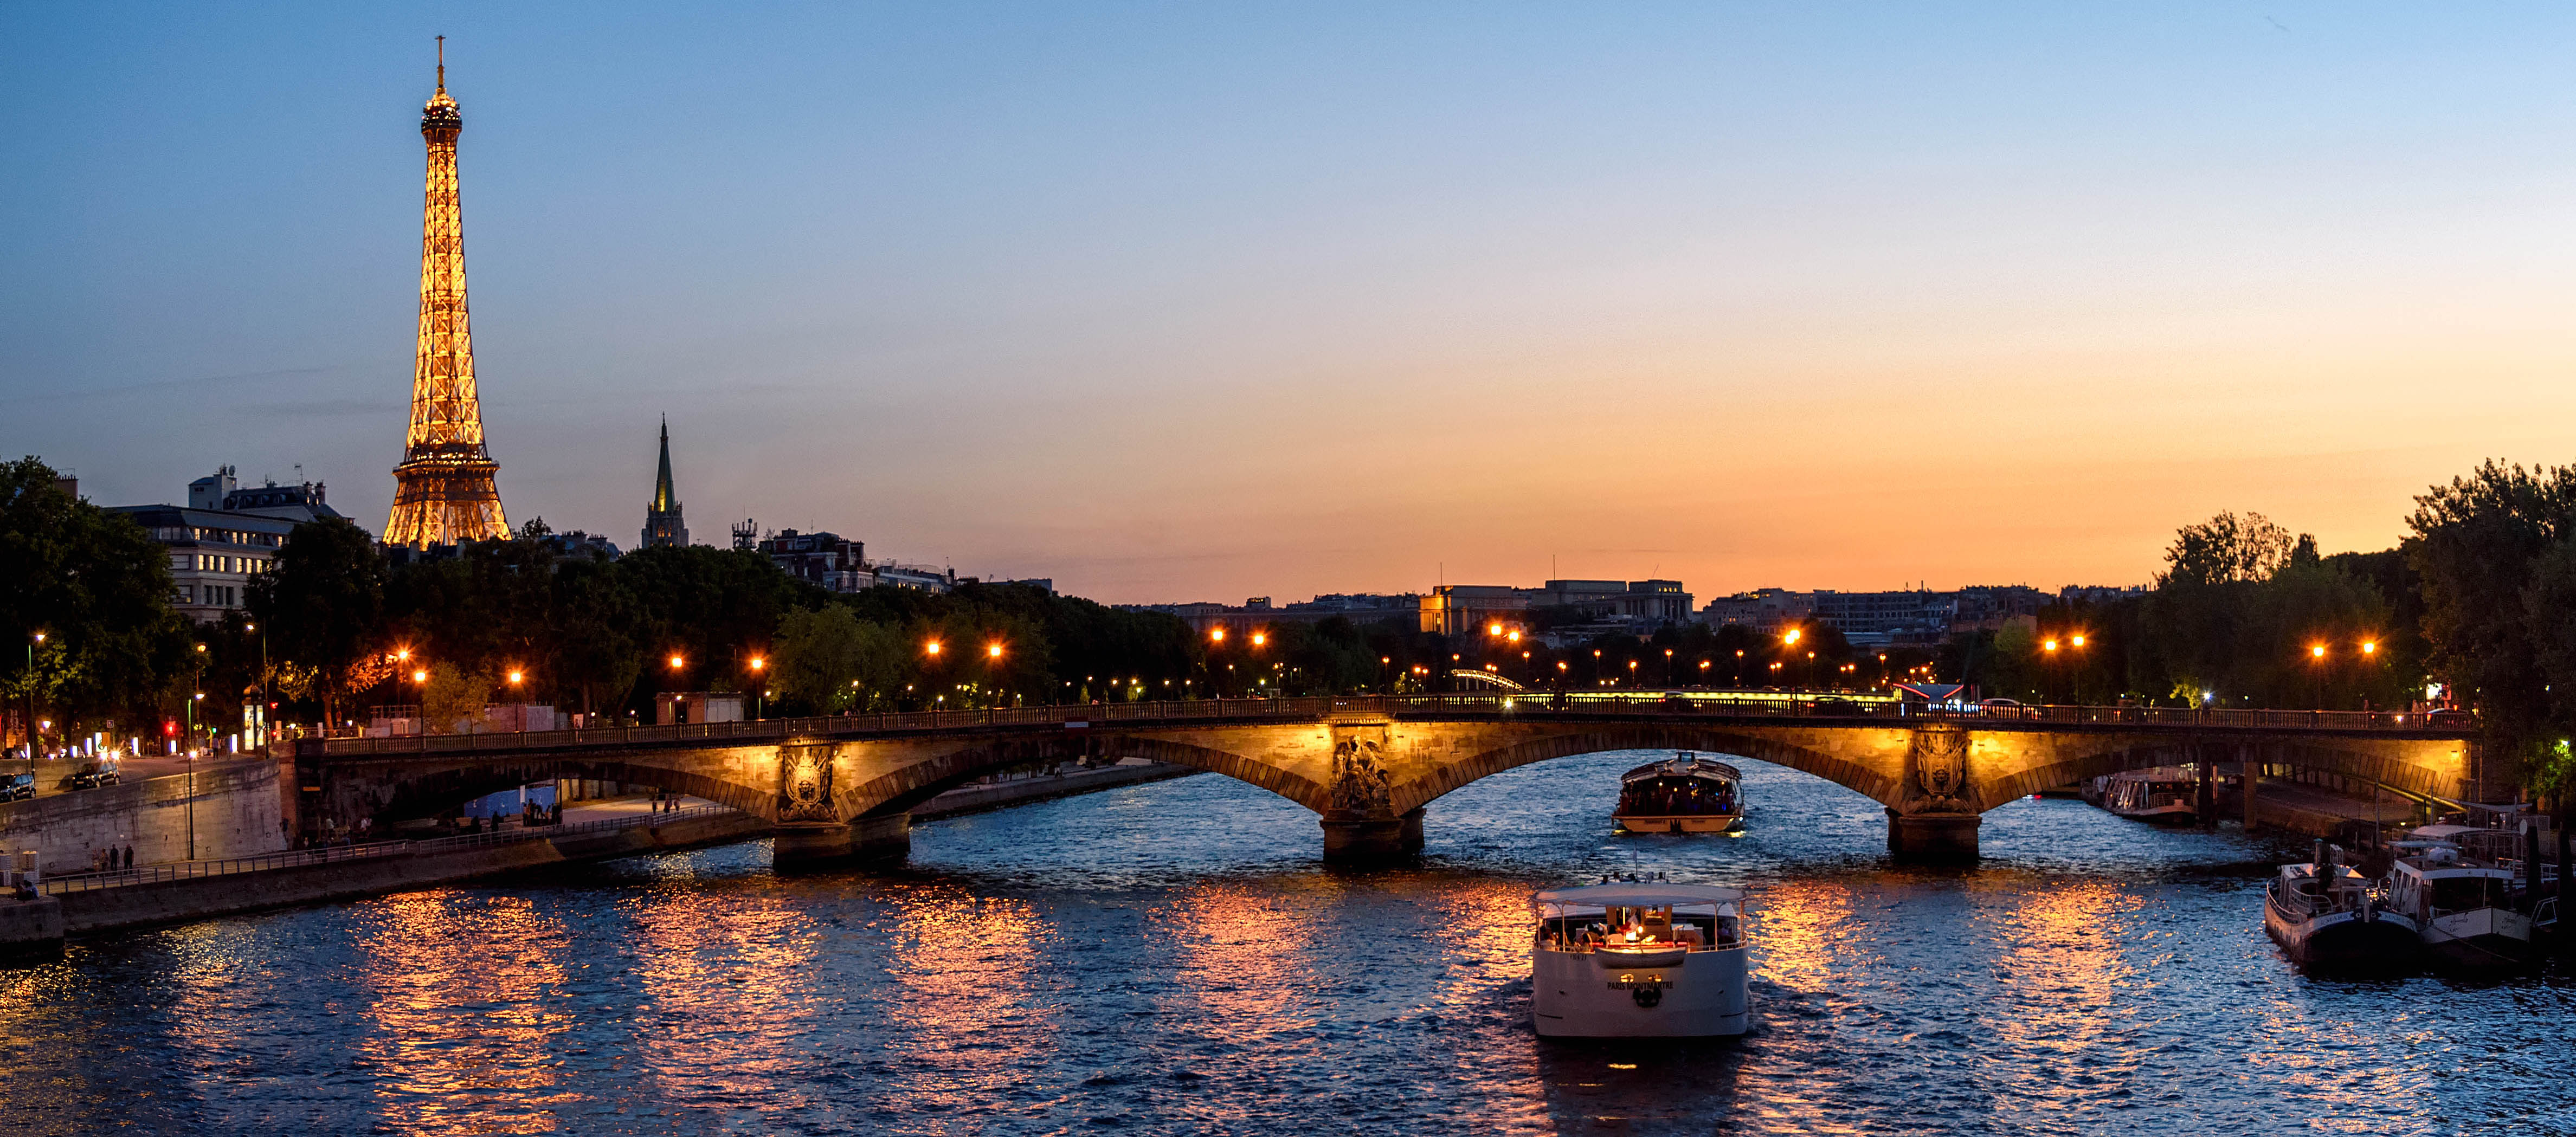 Какая река сена. Эйфелева башня река сена. Париж. Эйфелева башня, река сена. Река сена во Франции. Река сена в Париже.